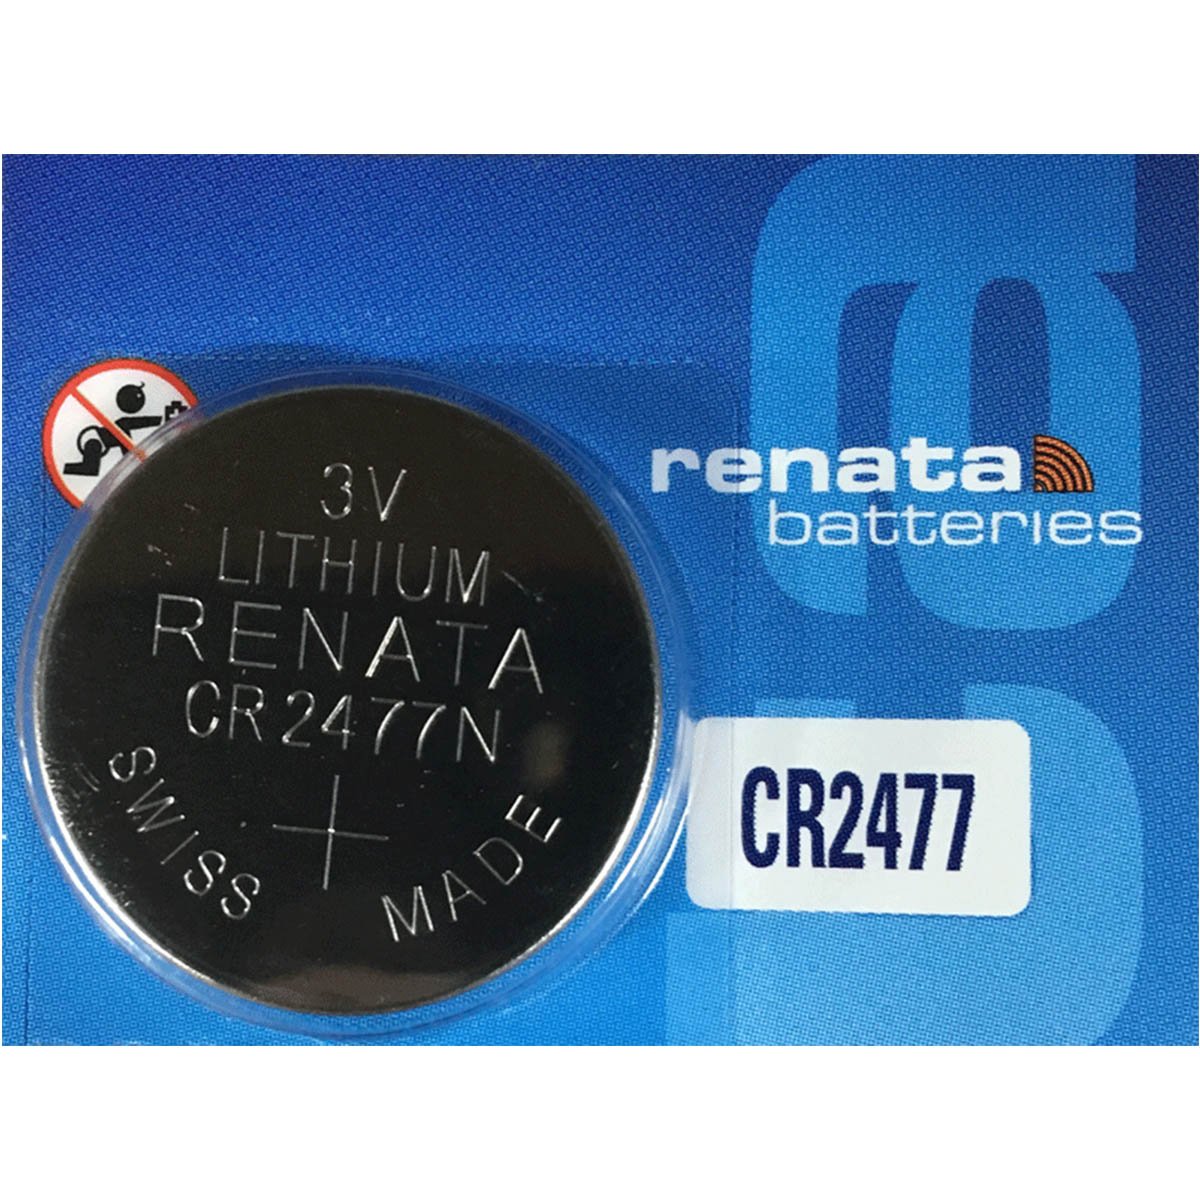 Pile bouton CR 2430 lithium Renata 285 mAh 3 V